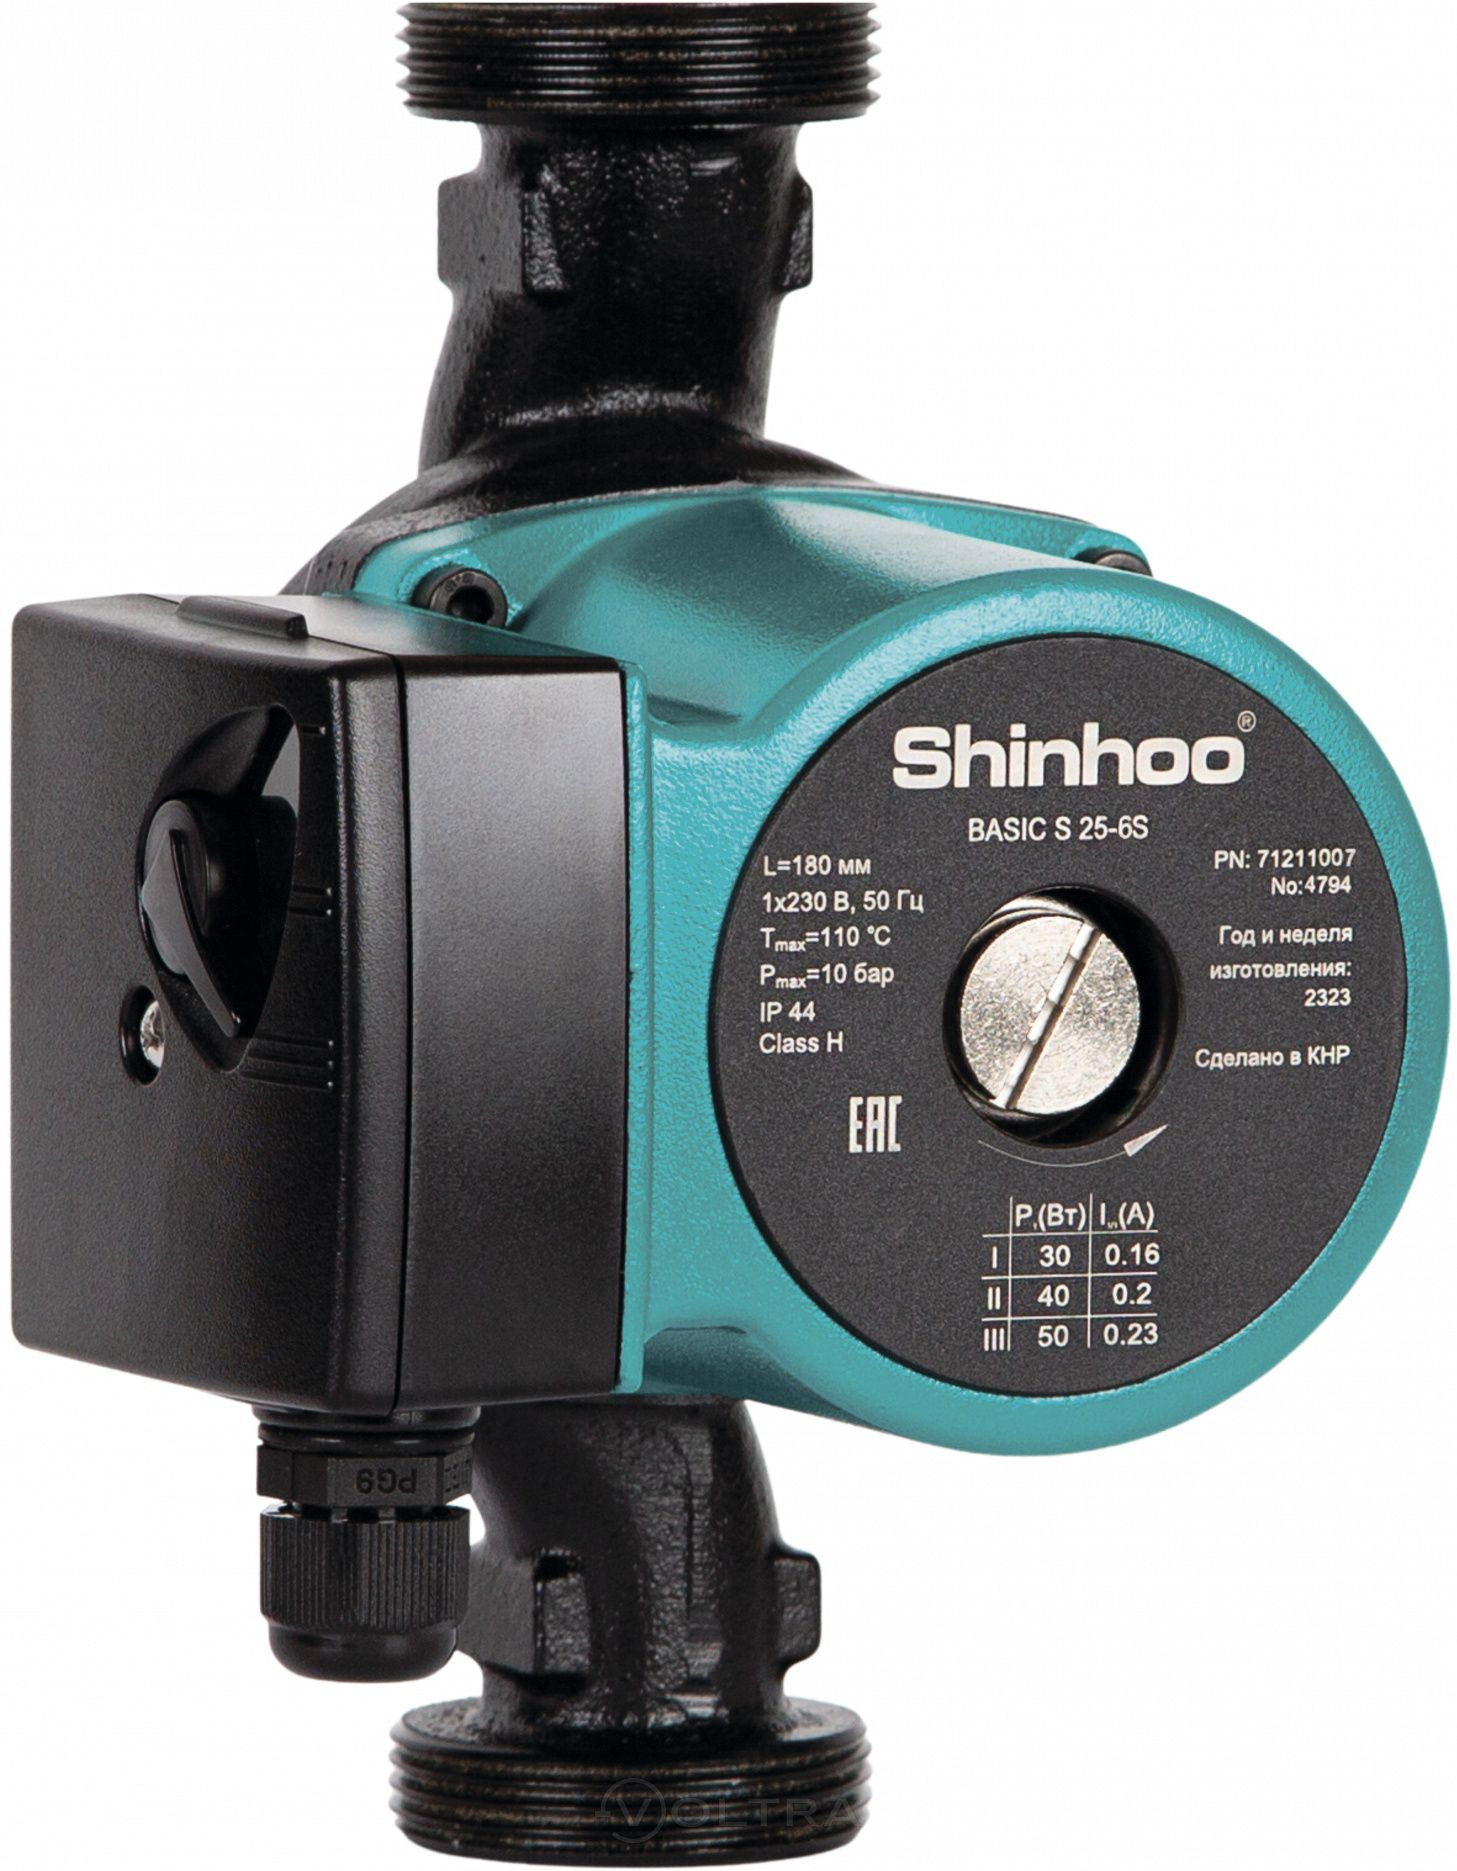 SHINHOO BASIC S 25-6S 180